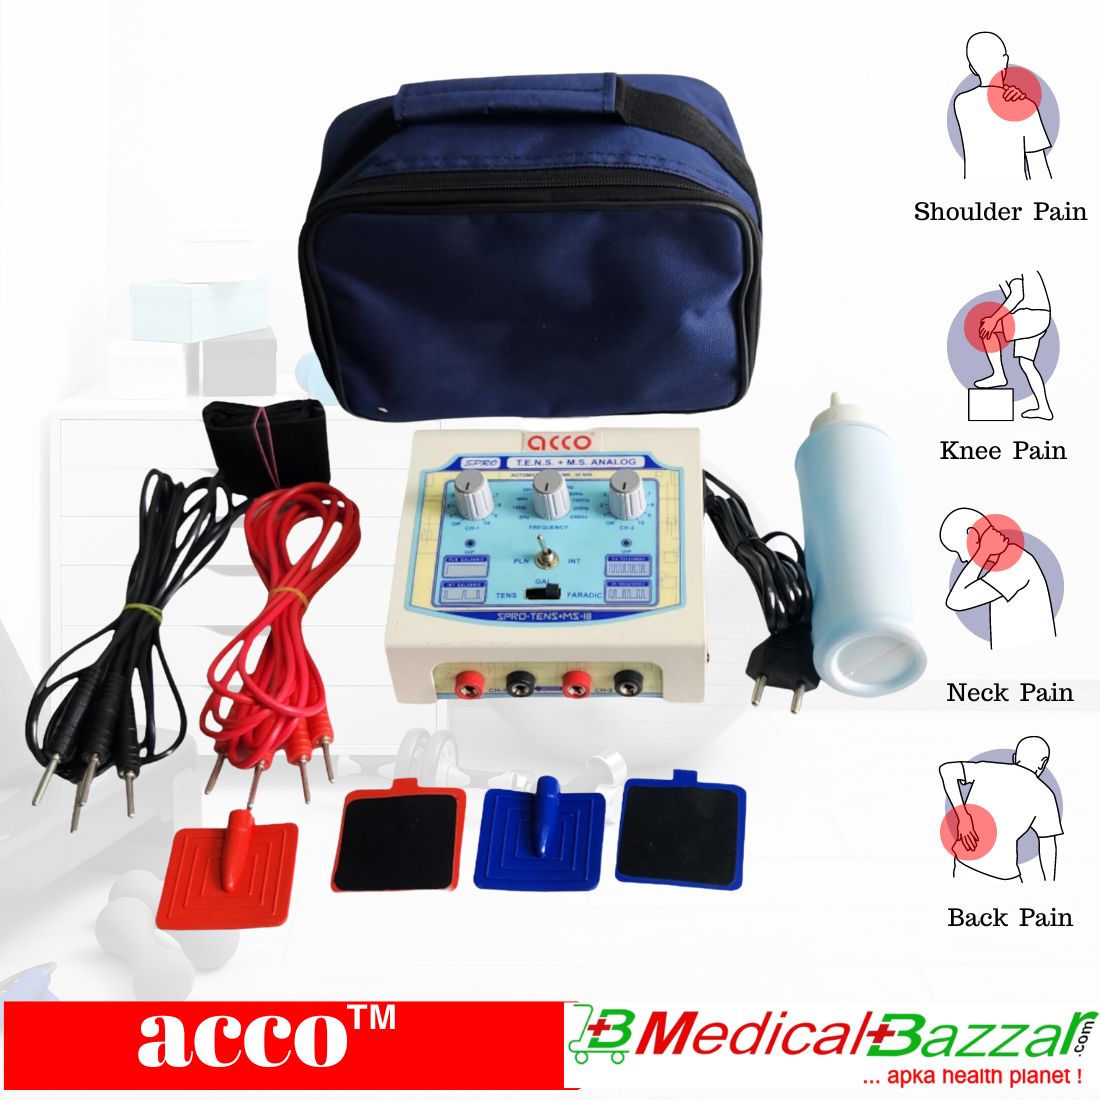 acco Tens Machine 2 Ch with Muscle Stimulator